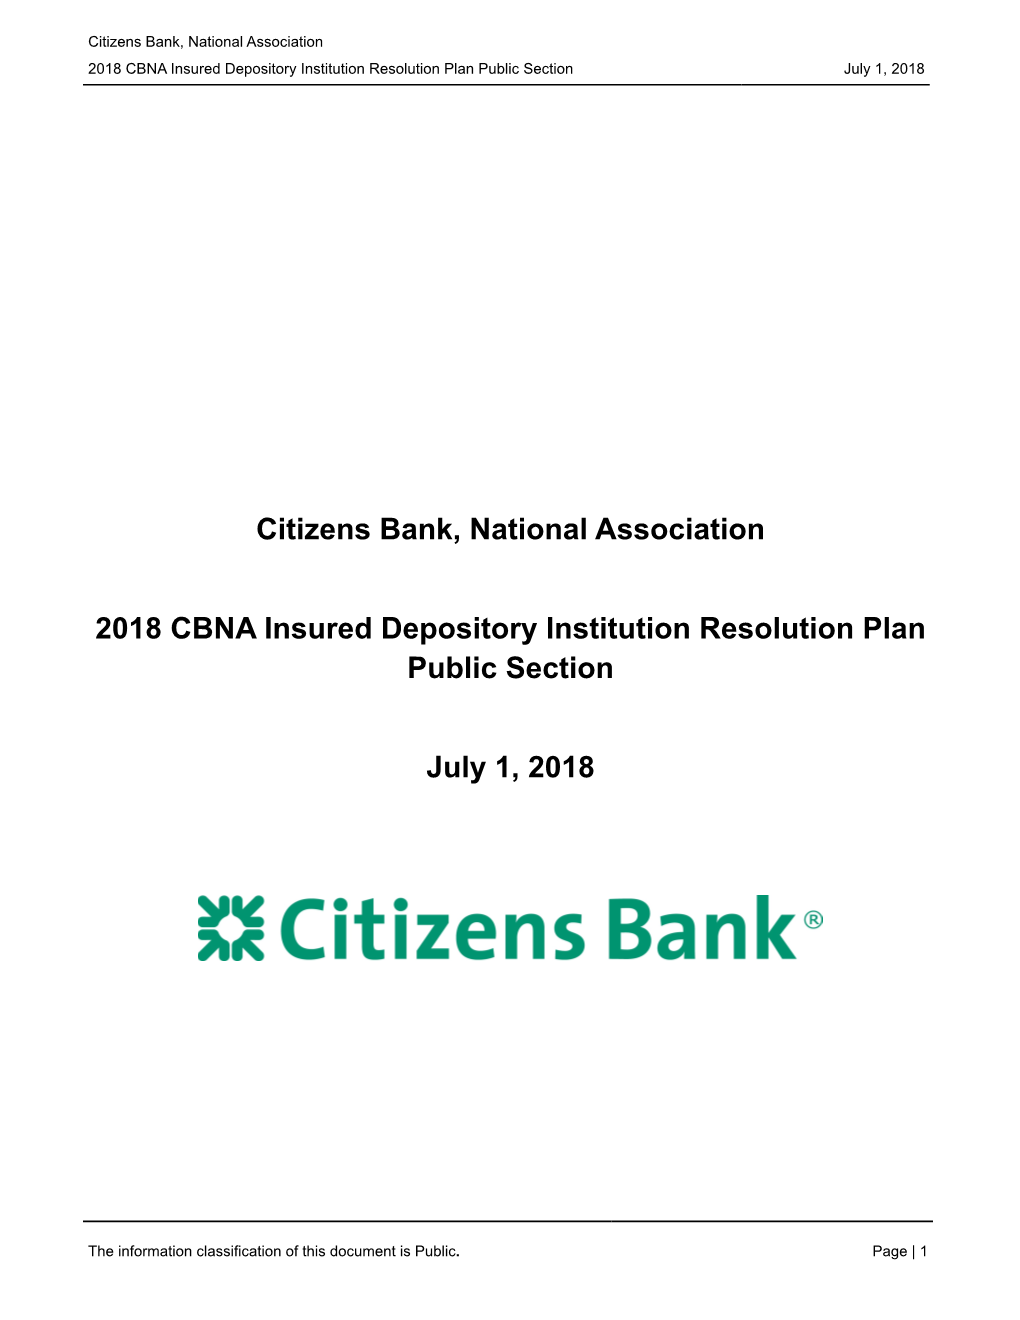 2018 Public Section CBNA IDI Plan